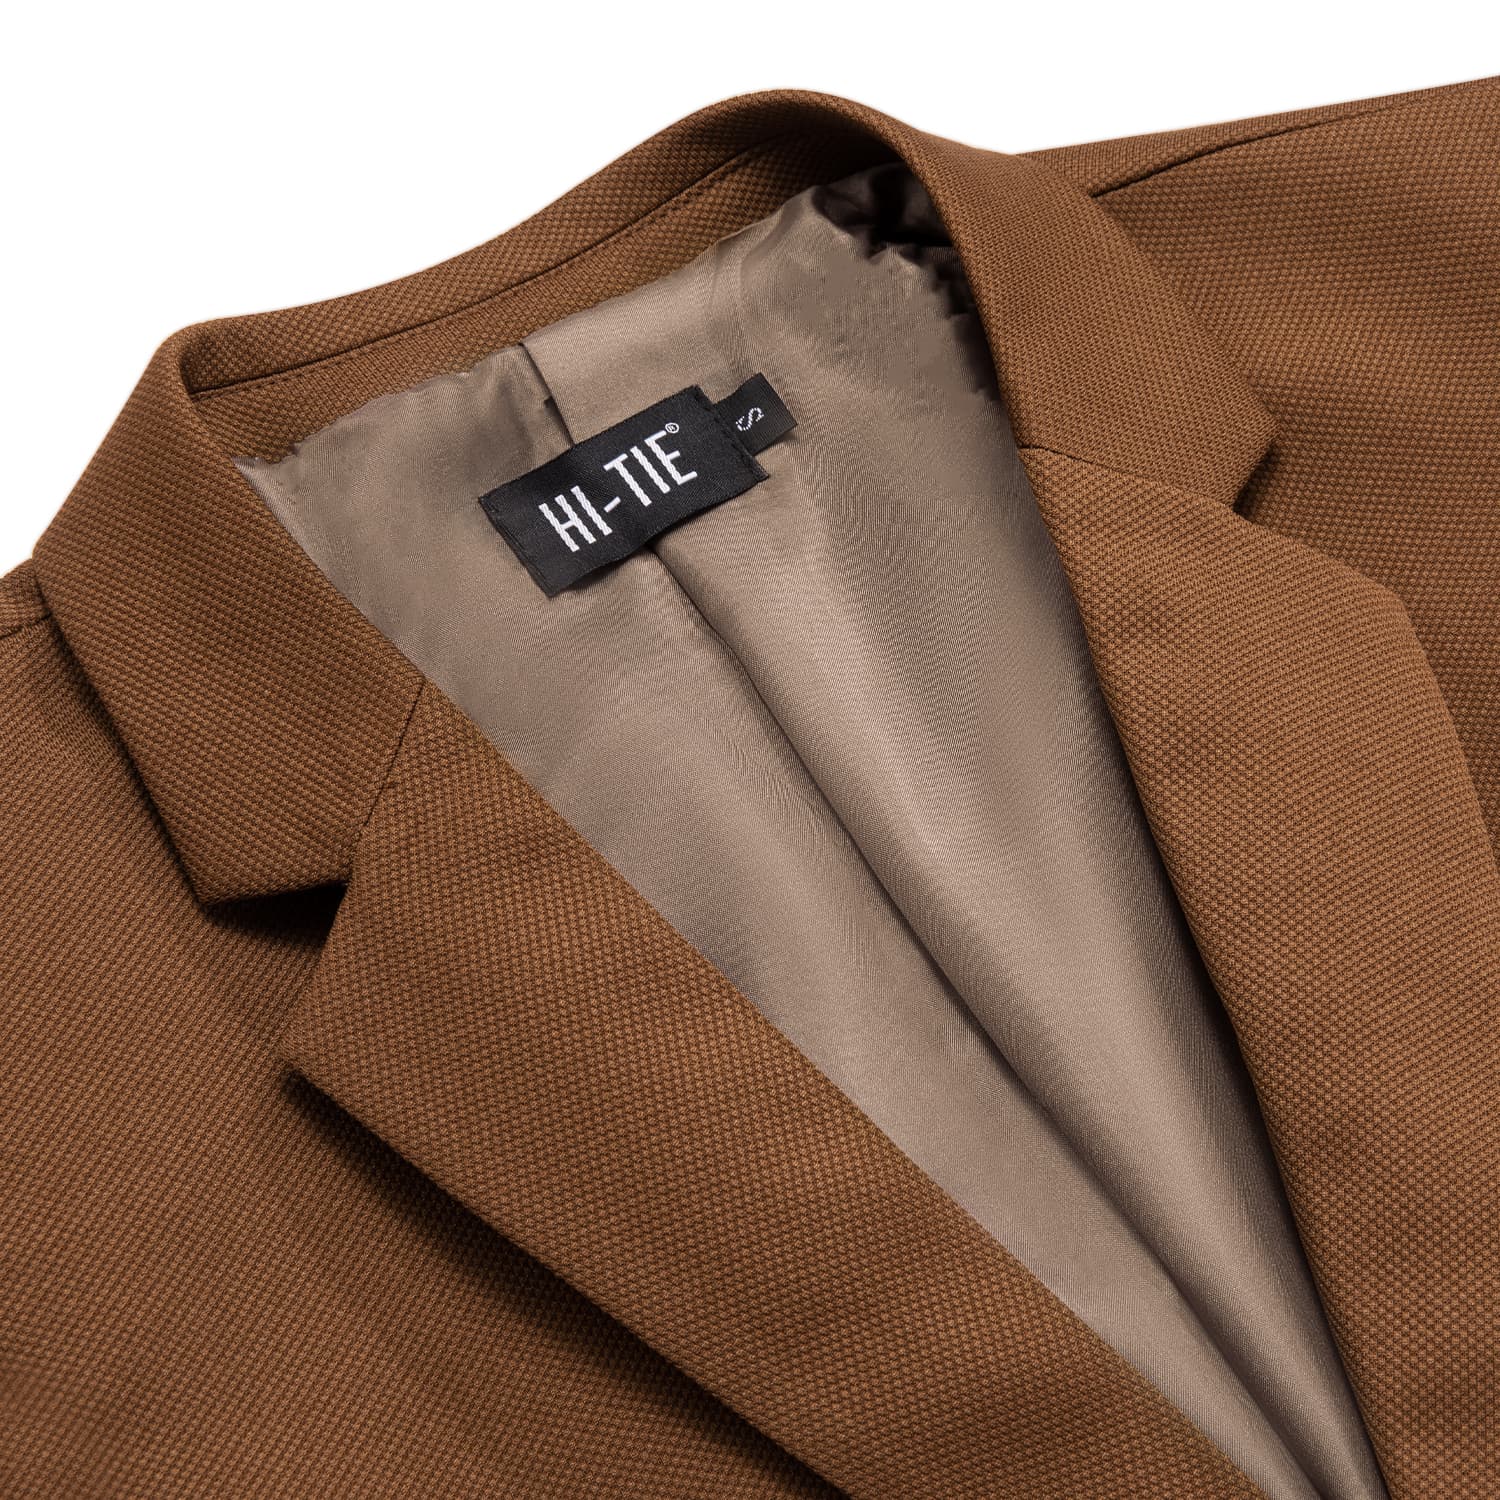 Hi-Tie Business Daily Blazer Saddle Brown Men's Suit Jacket Slim Fit Coat